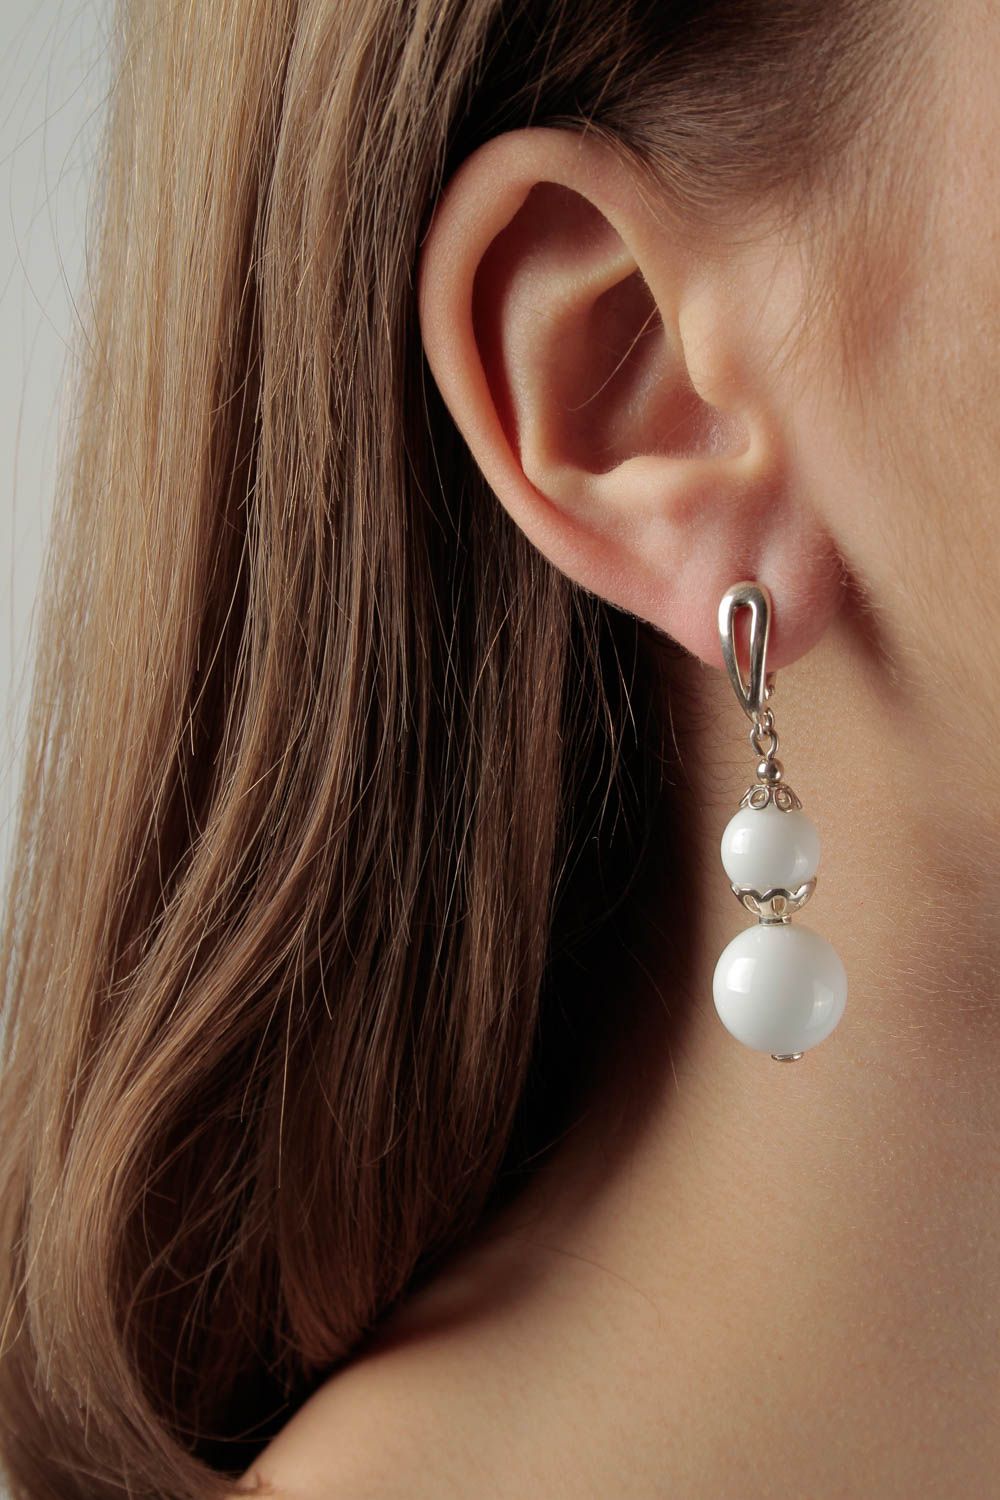 Handmade beautiful earrings designer cute earrings tender unusual jewelry photo 1